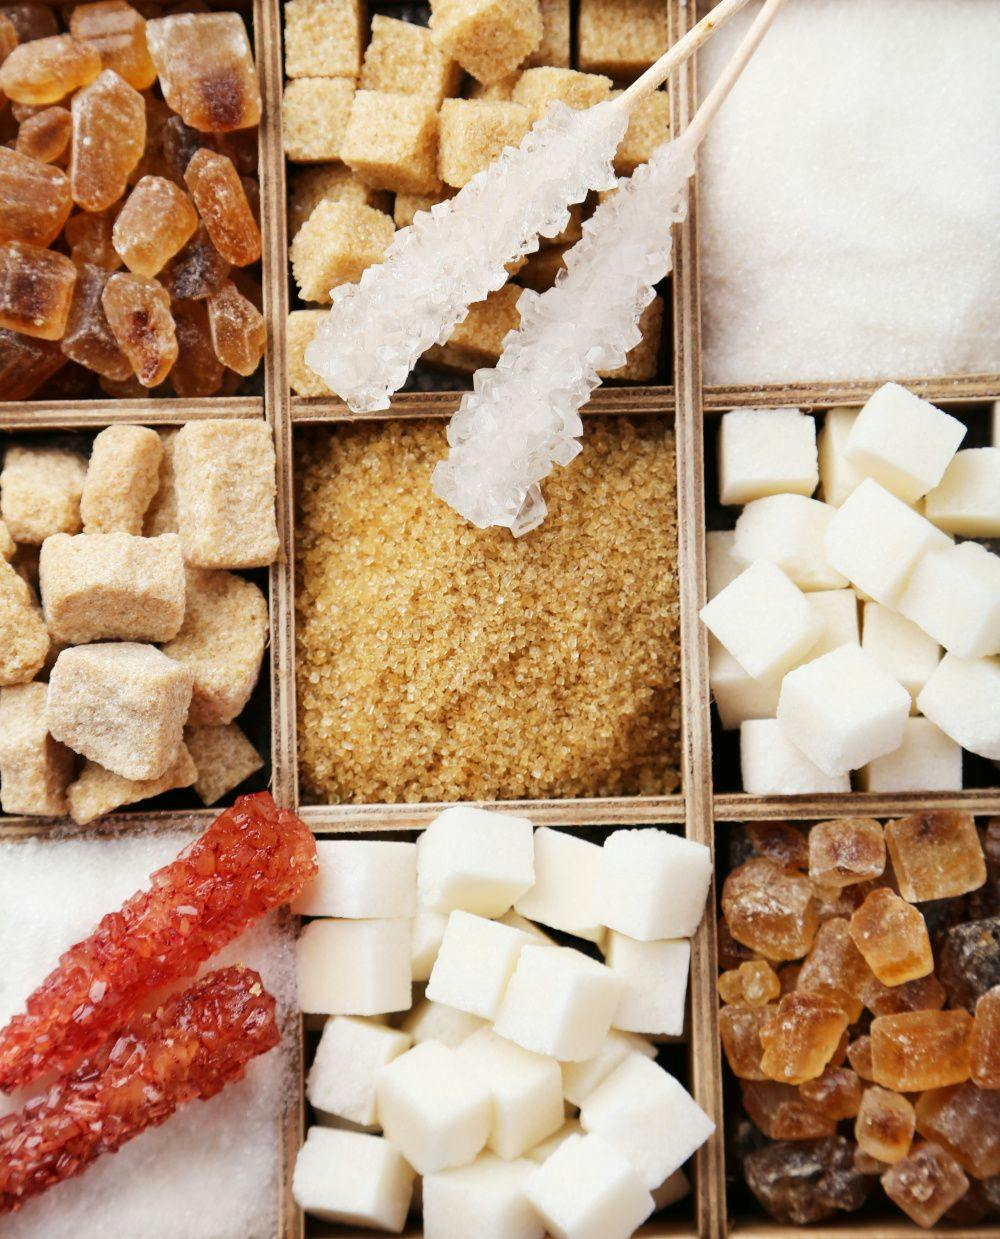 Alternative sweetener options grow as consumers demand less sugar